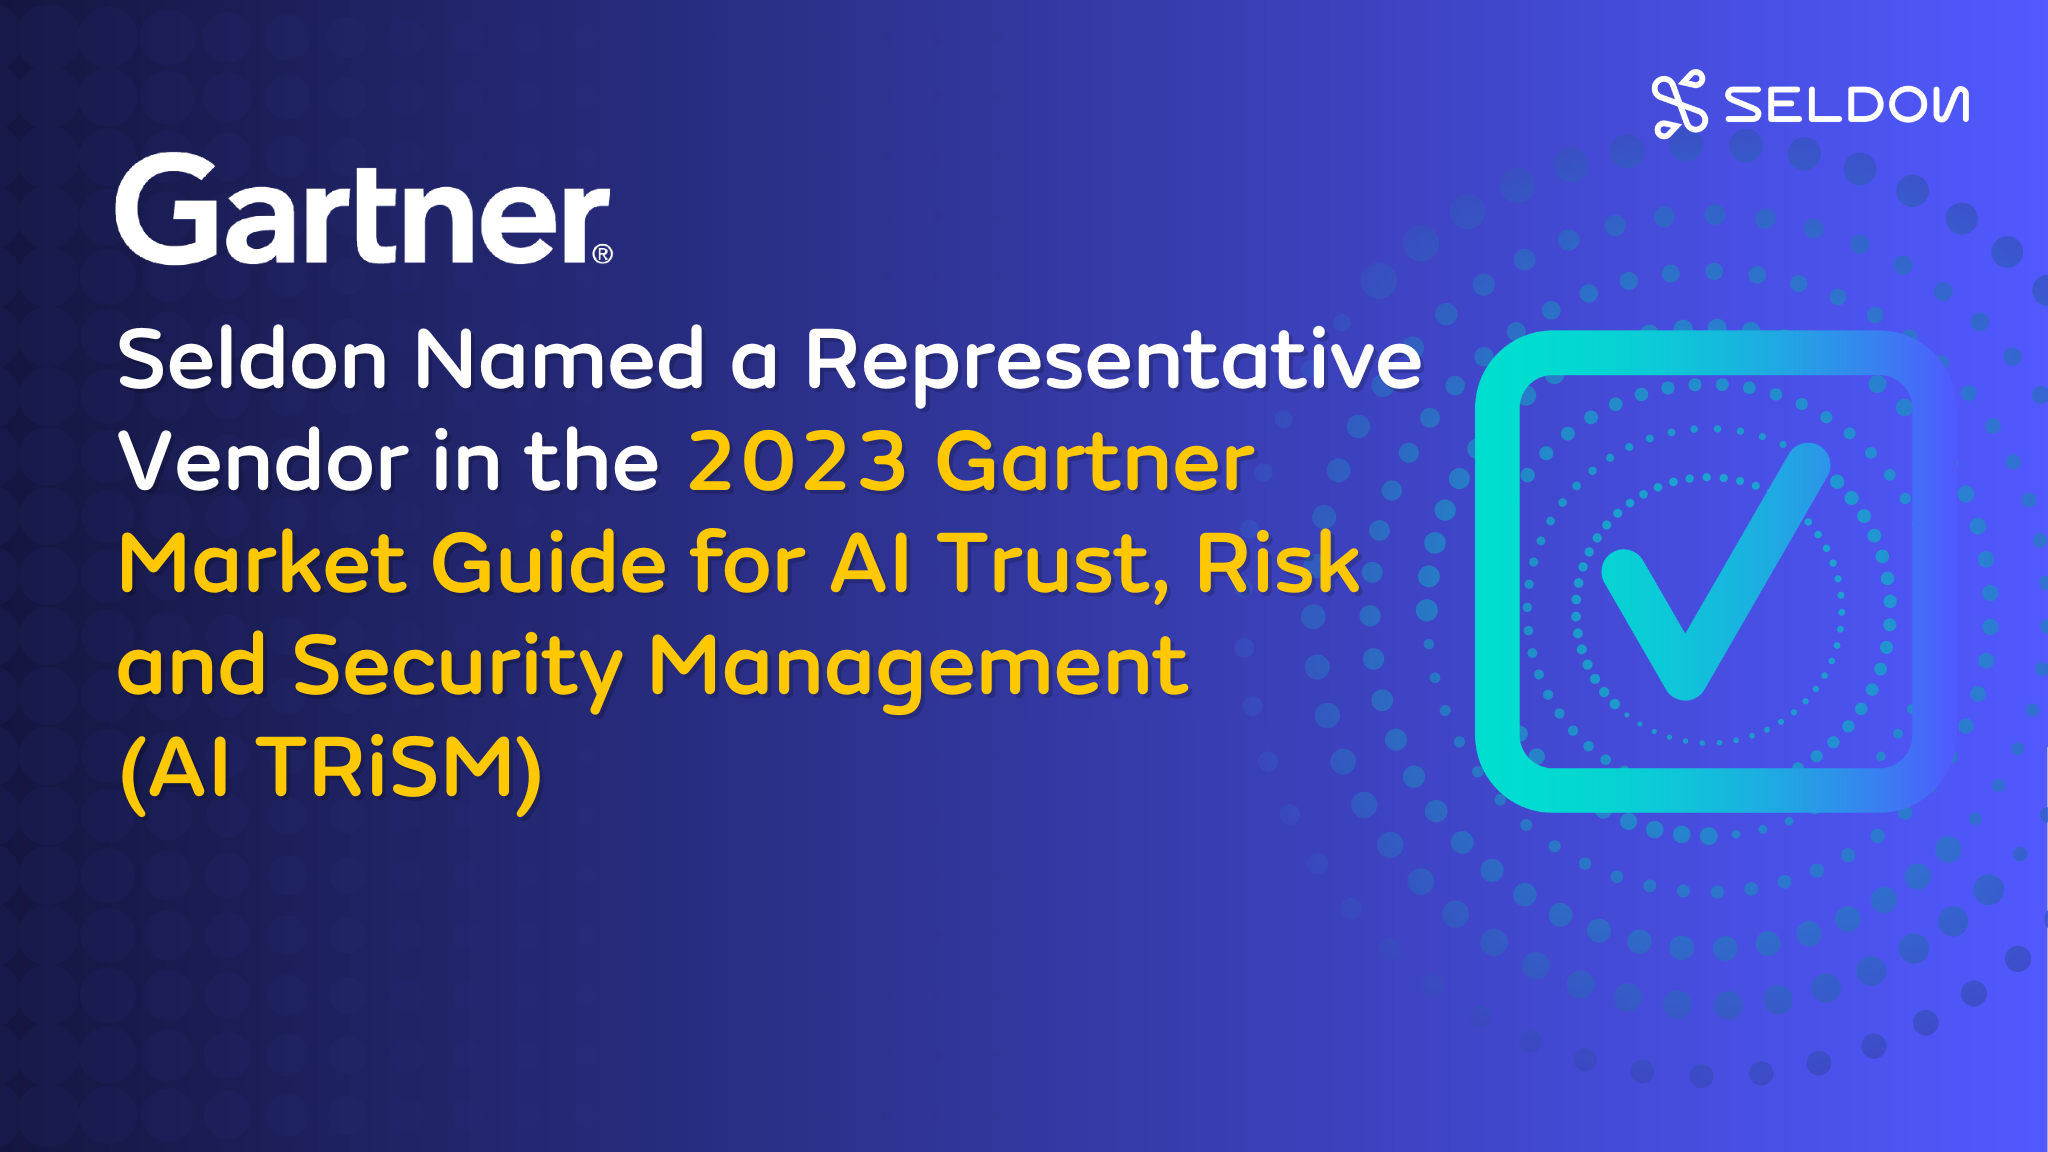 Seldon Technologies Named a Representative Vendor in 2023 Gartner® Market Guide for AI TRiSM